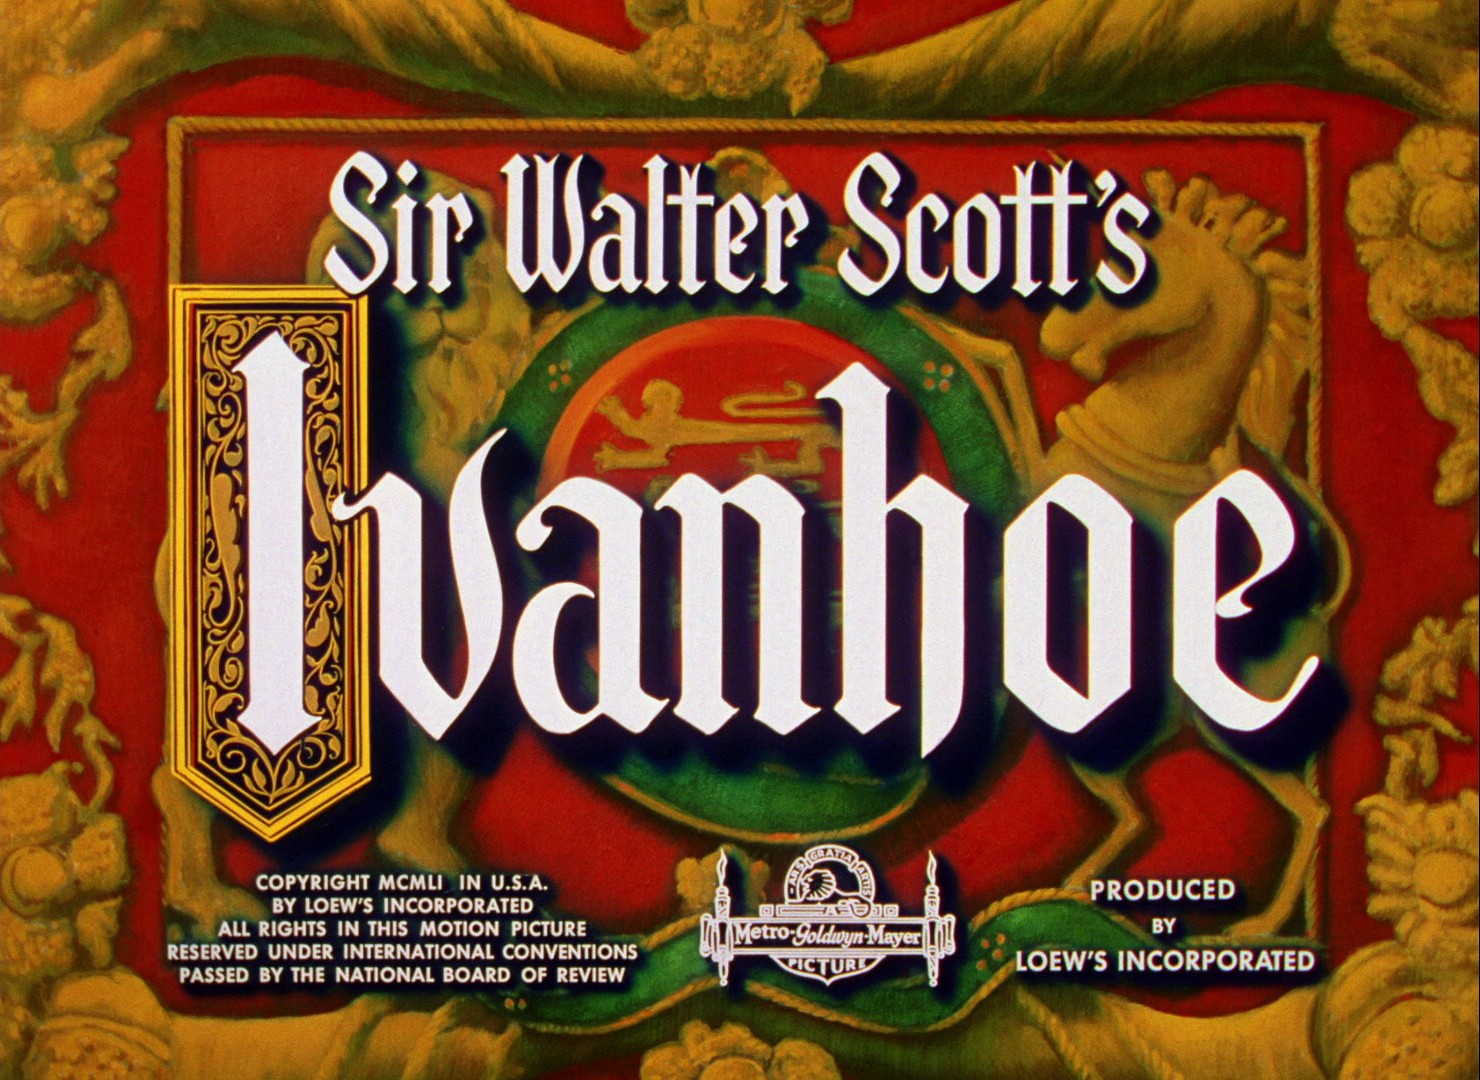 Ivanhoé (Richard Thorpe, 1952) title still